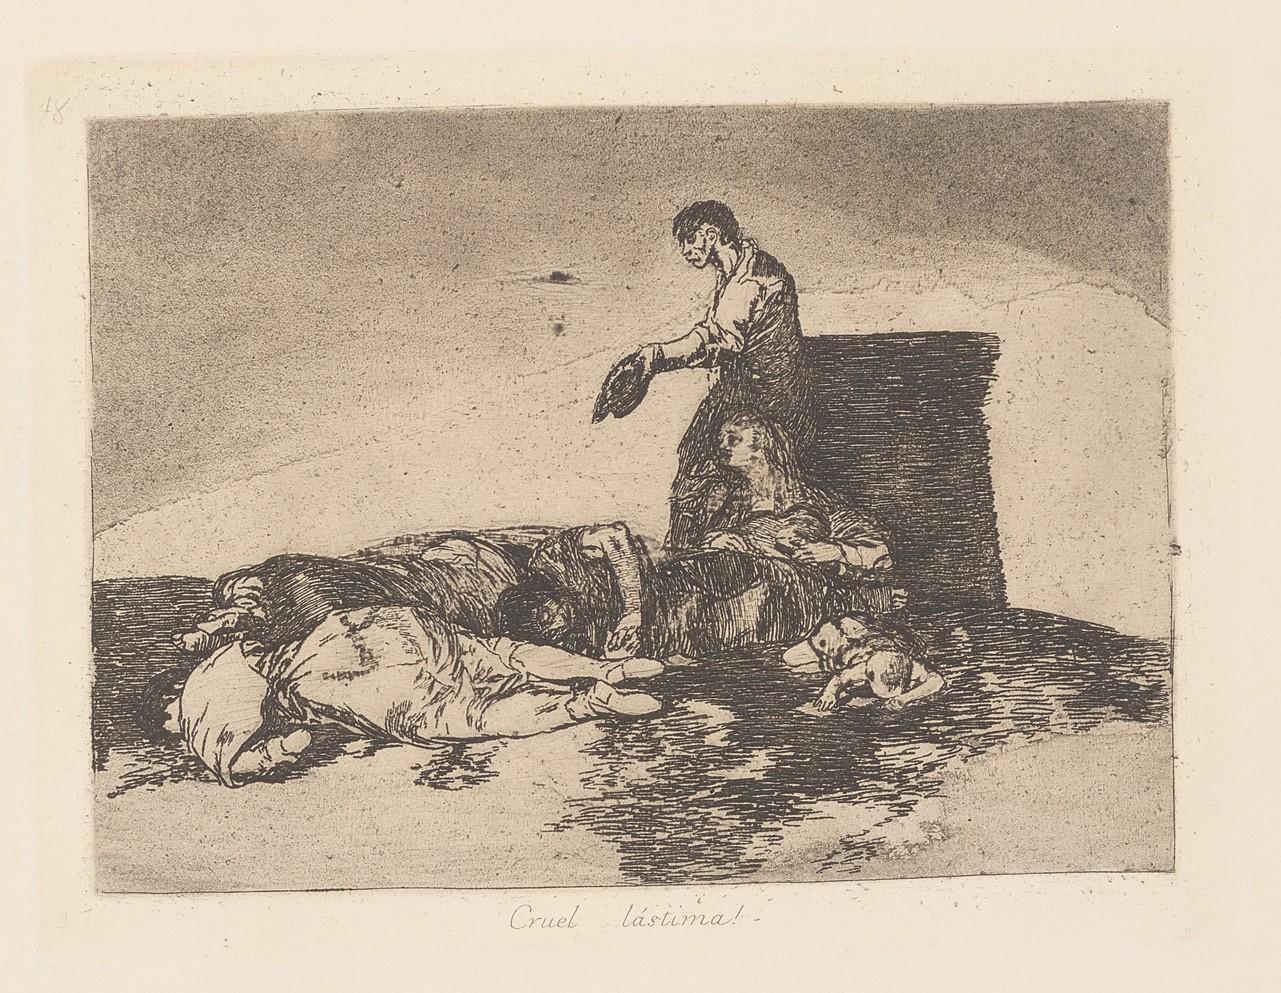 Cruel tale of woe! (Cruel lastima!) - Goya y Lucientes Francisco